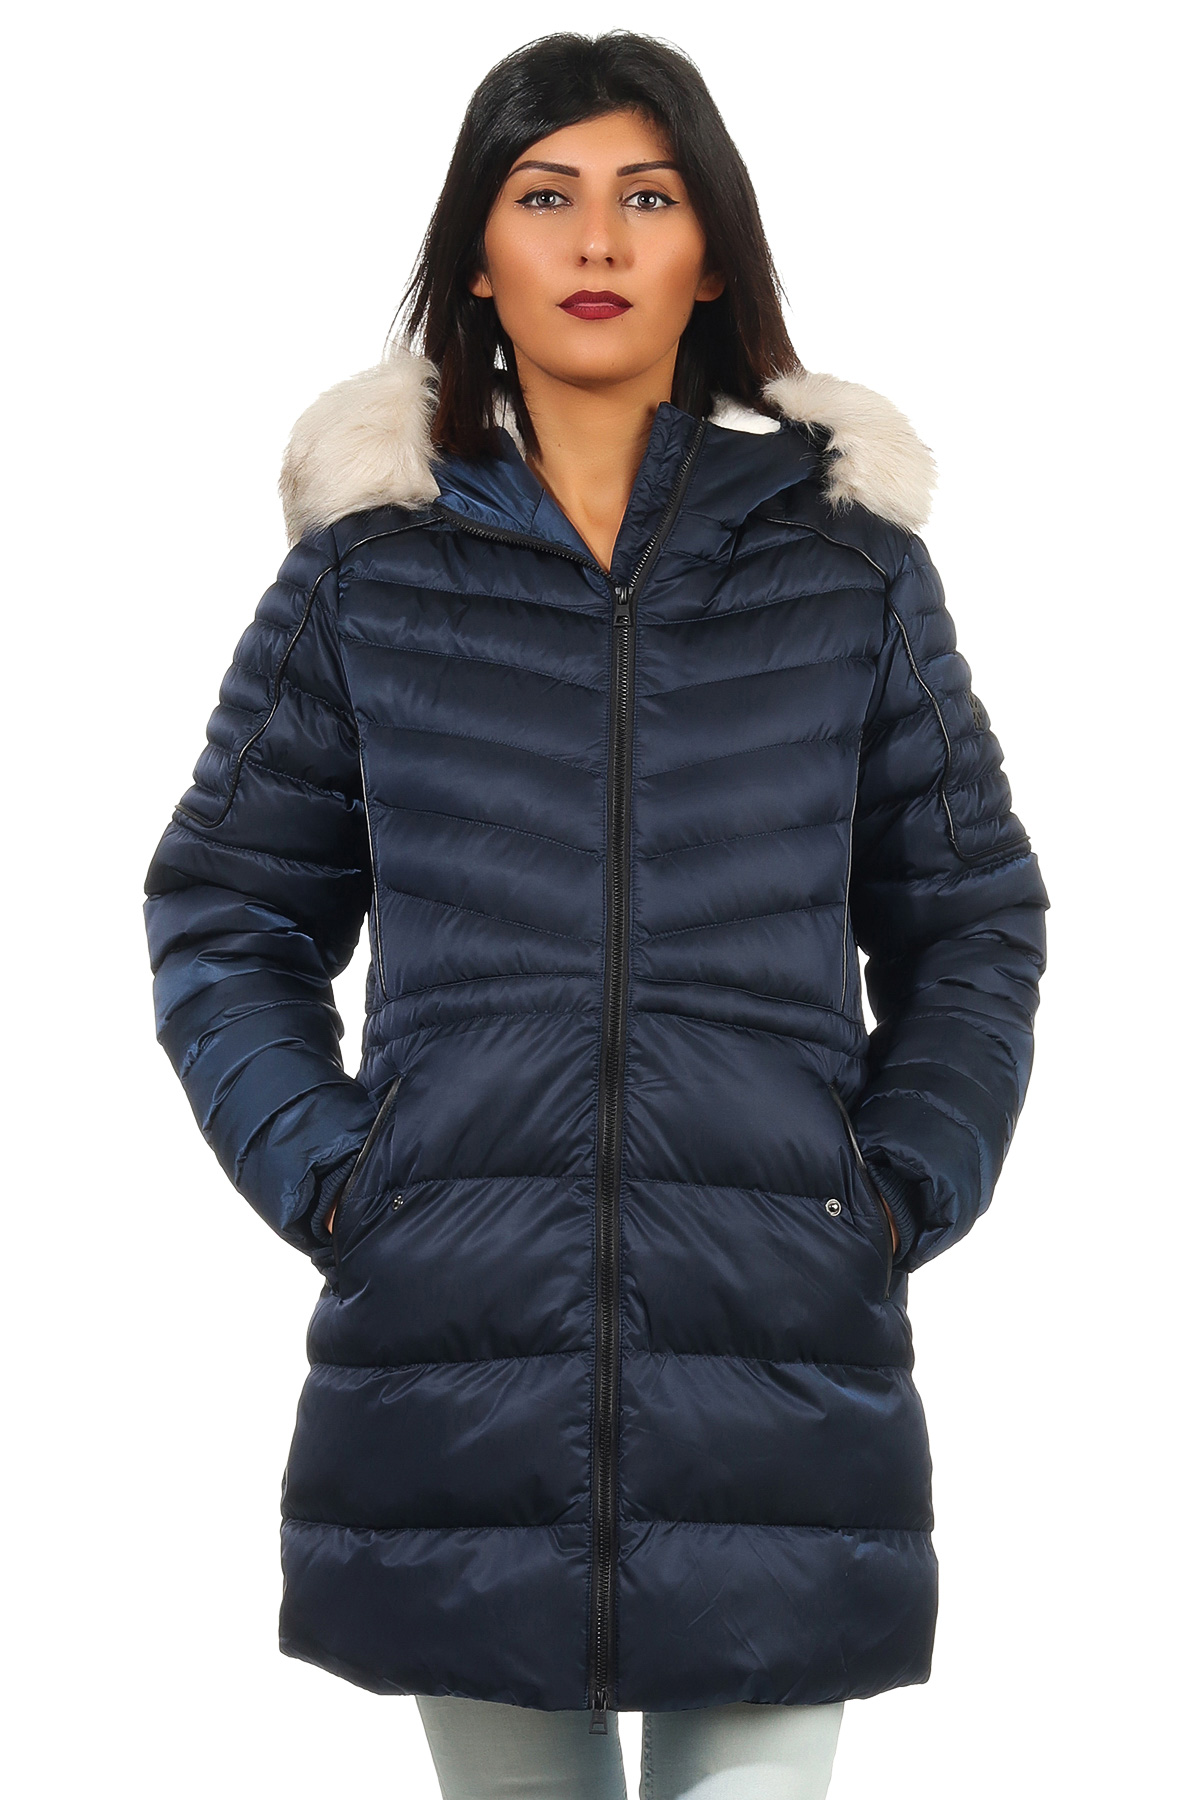 Geographical Norway Ladies Winter Jacket Parka Coat Padded Warm | eBay